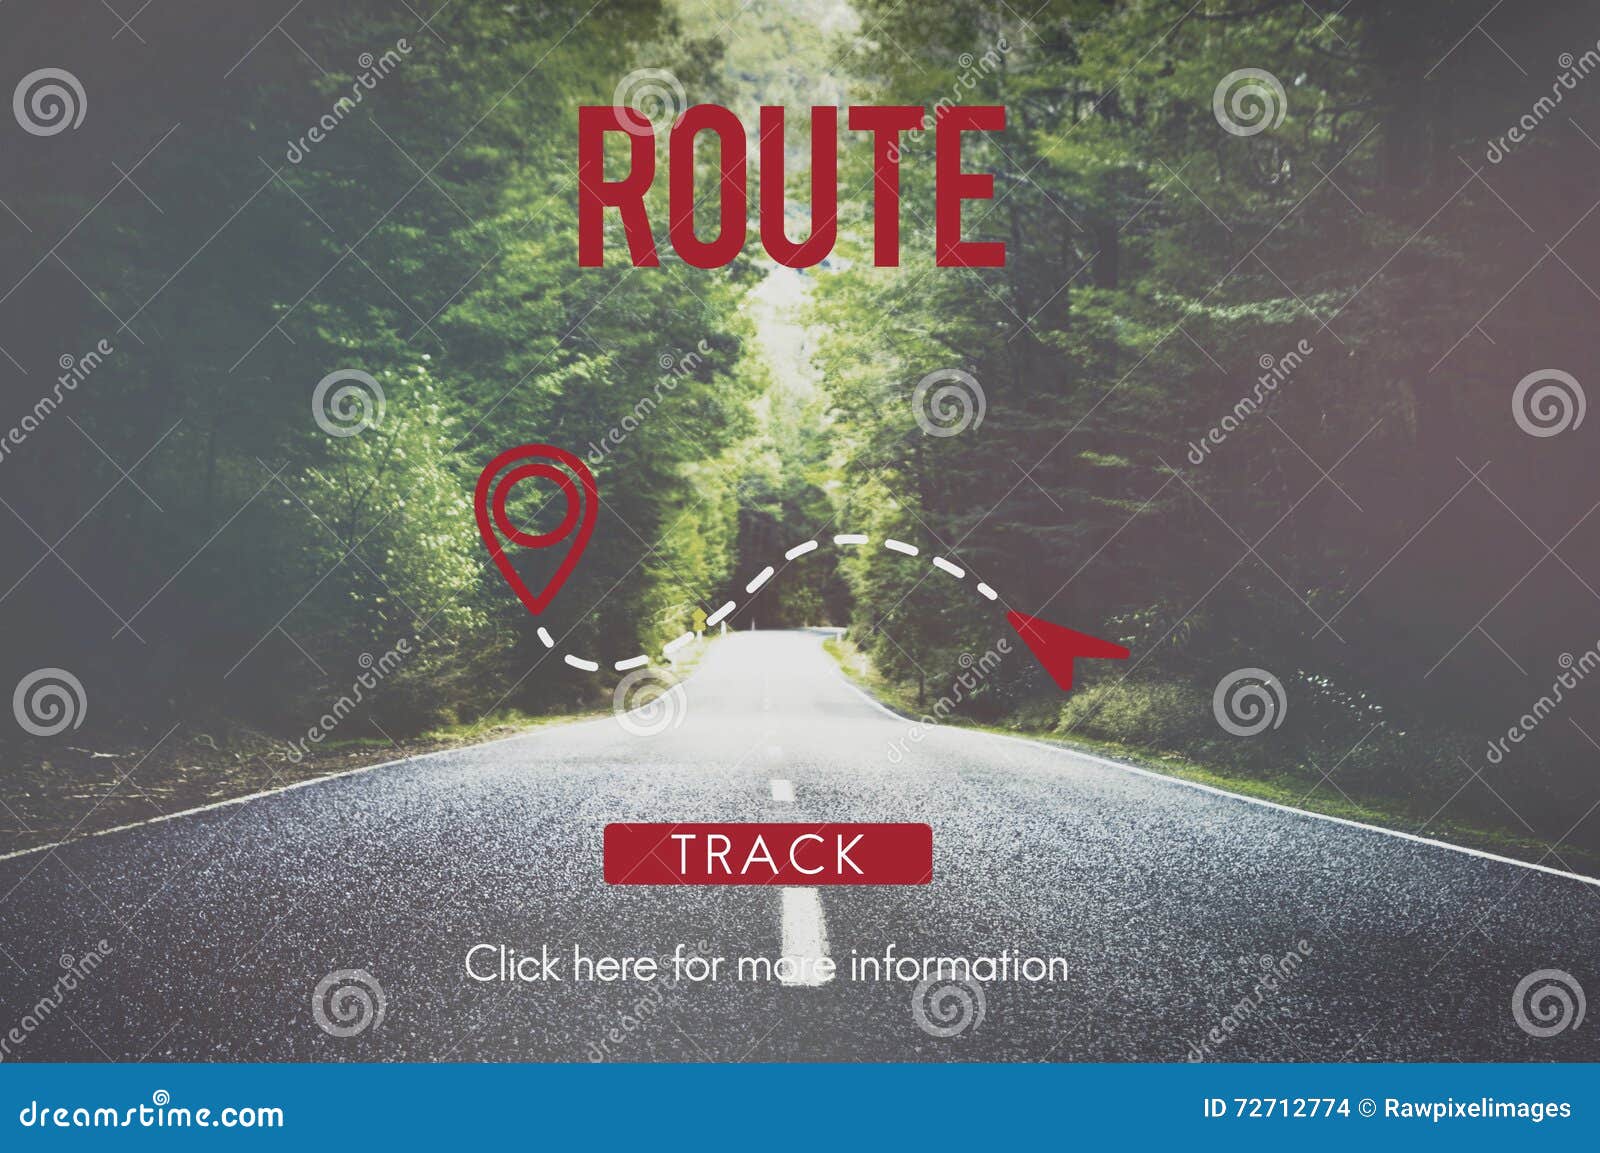 route navigate location planning transportation concept